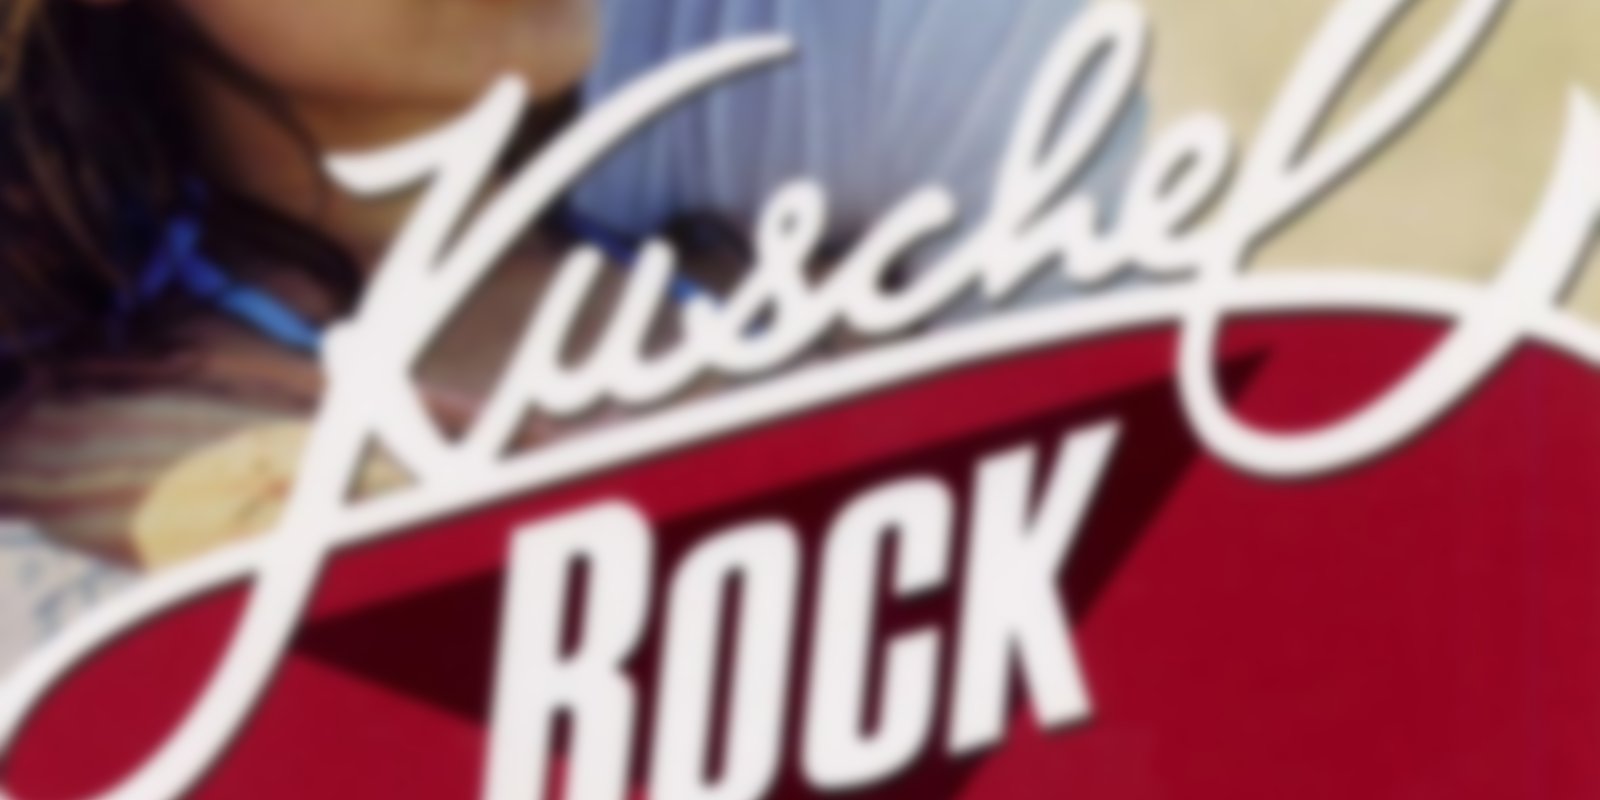 Kuschel Rock 1